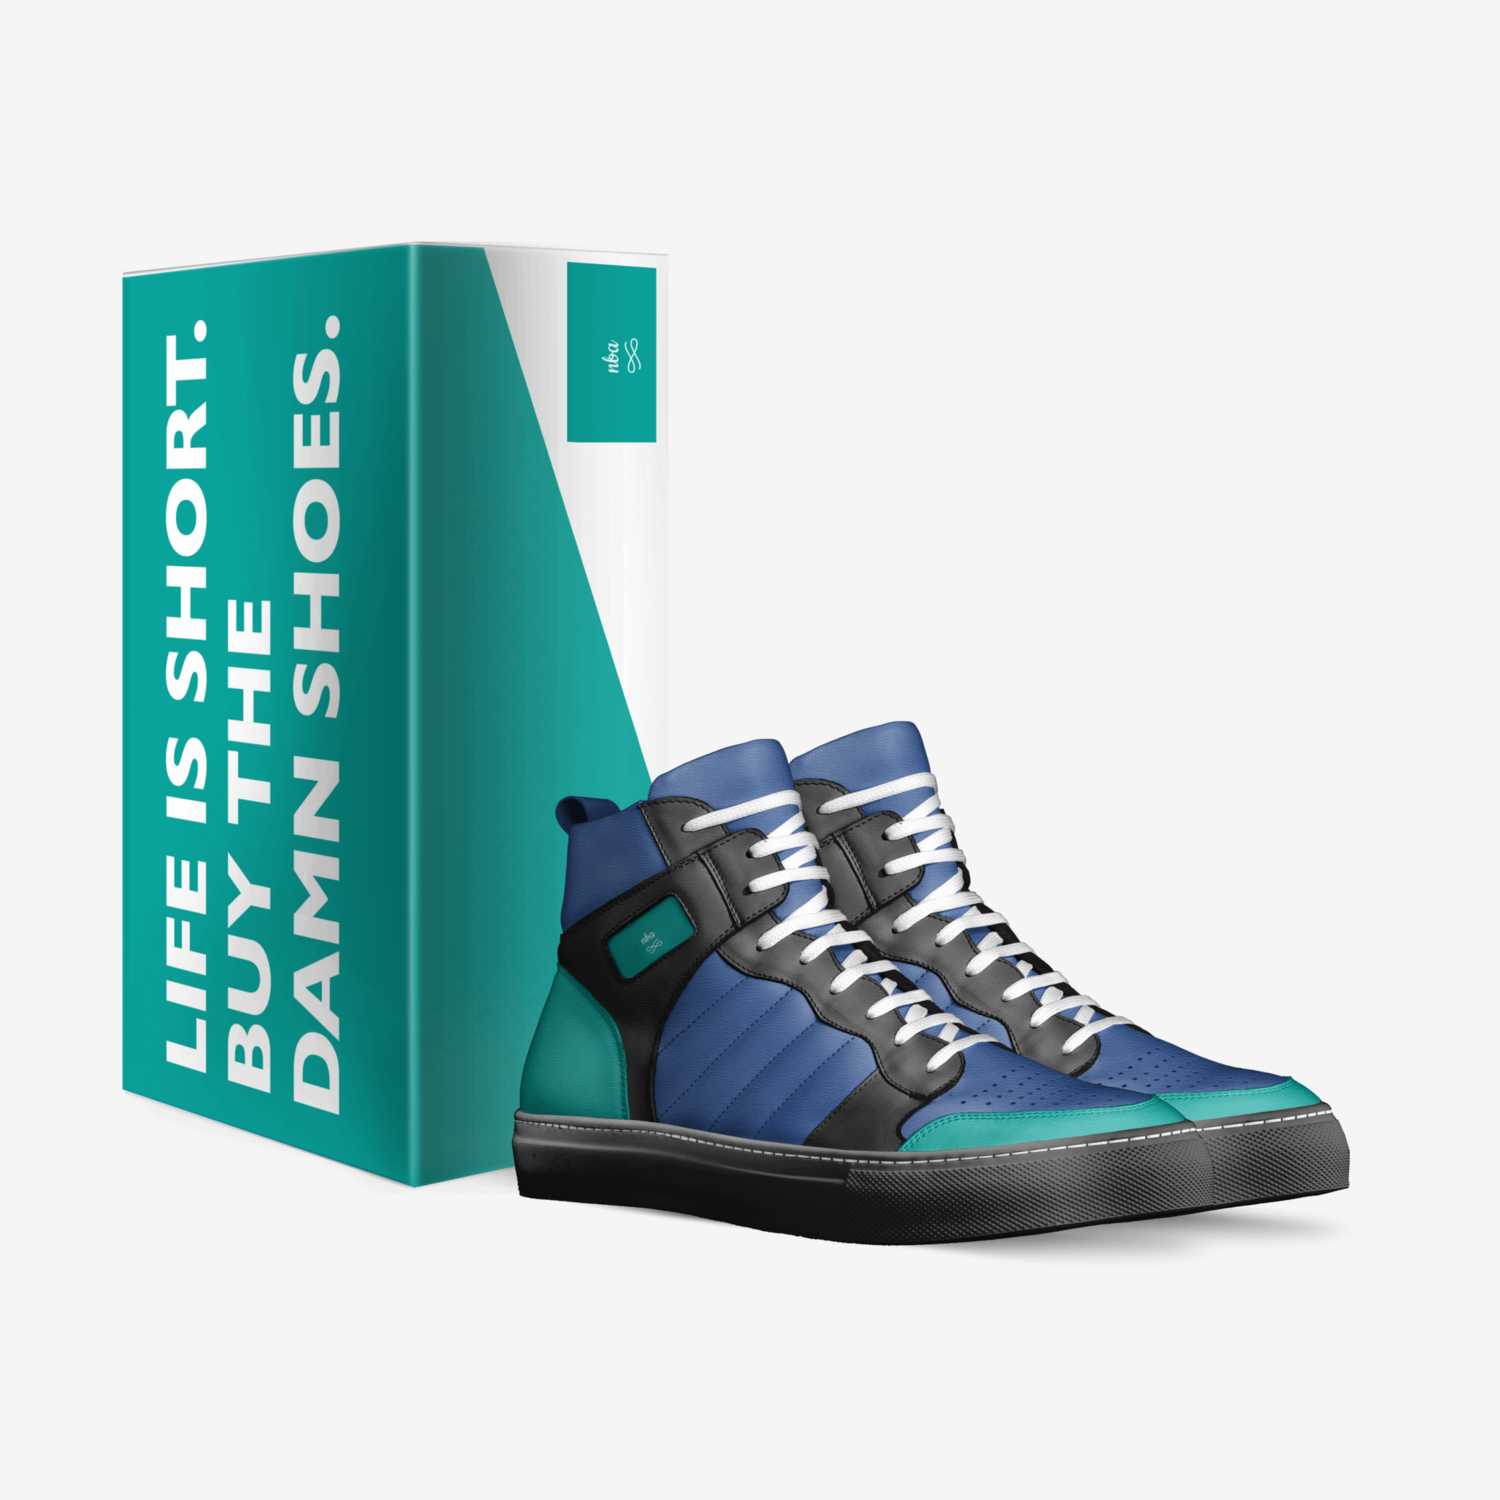 nba  custom made in Italy shoes by Jurosadi Reid | Box view